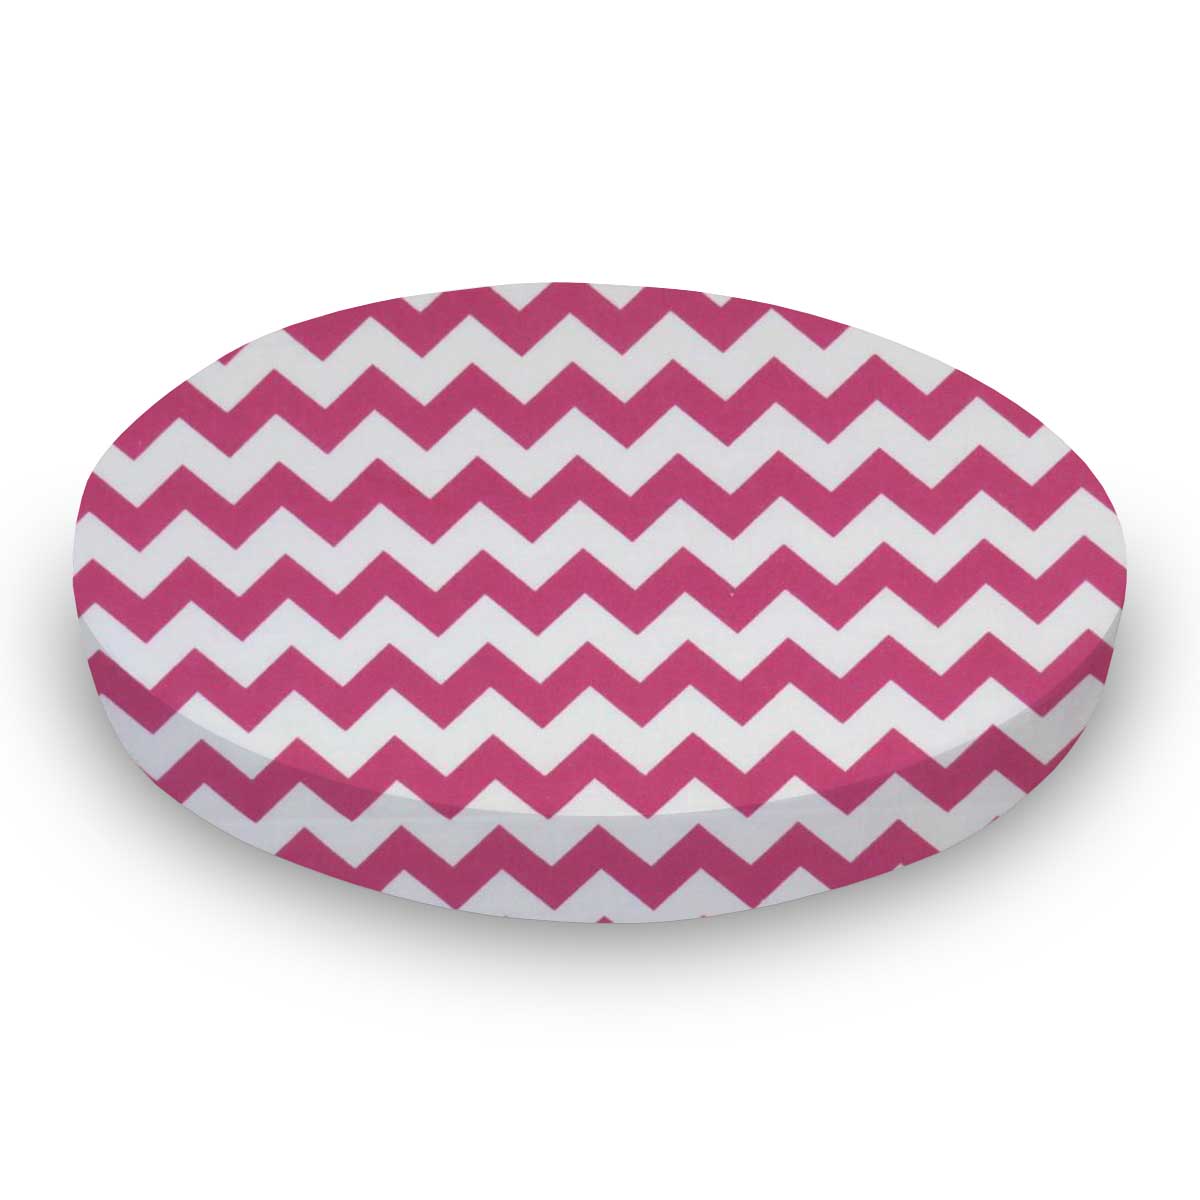 Oval Crib (Stokke Sleepi) - Hot Pink Chevron Zigzag - Fitted  Oval